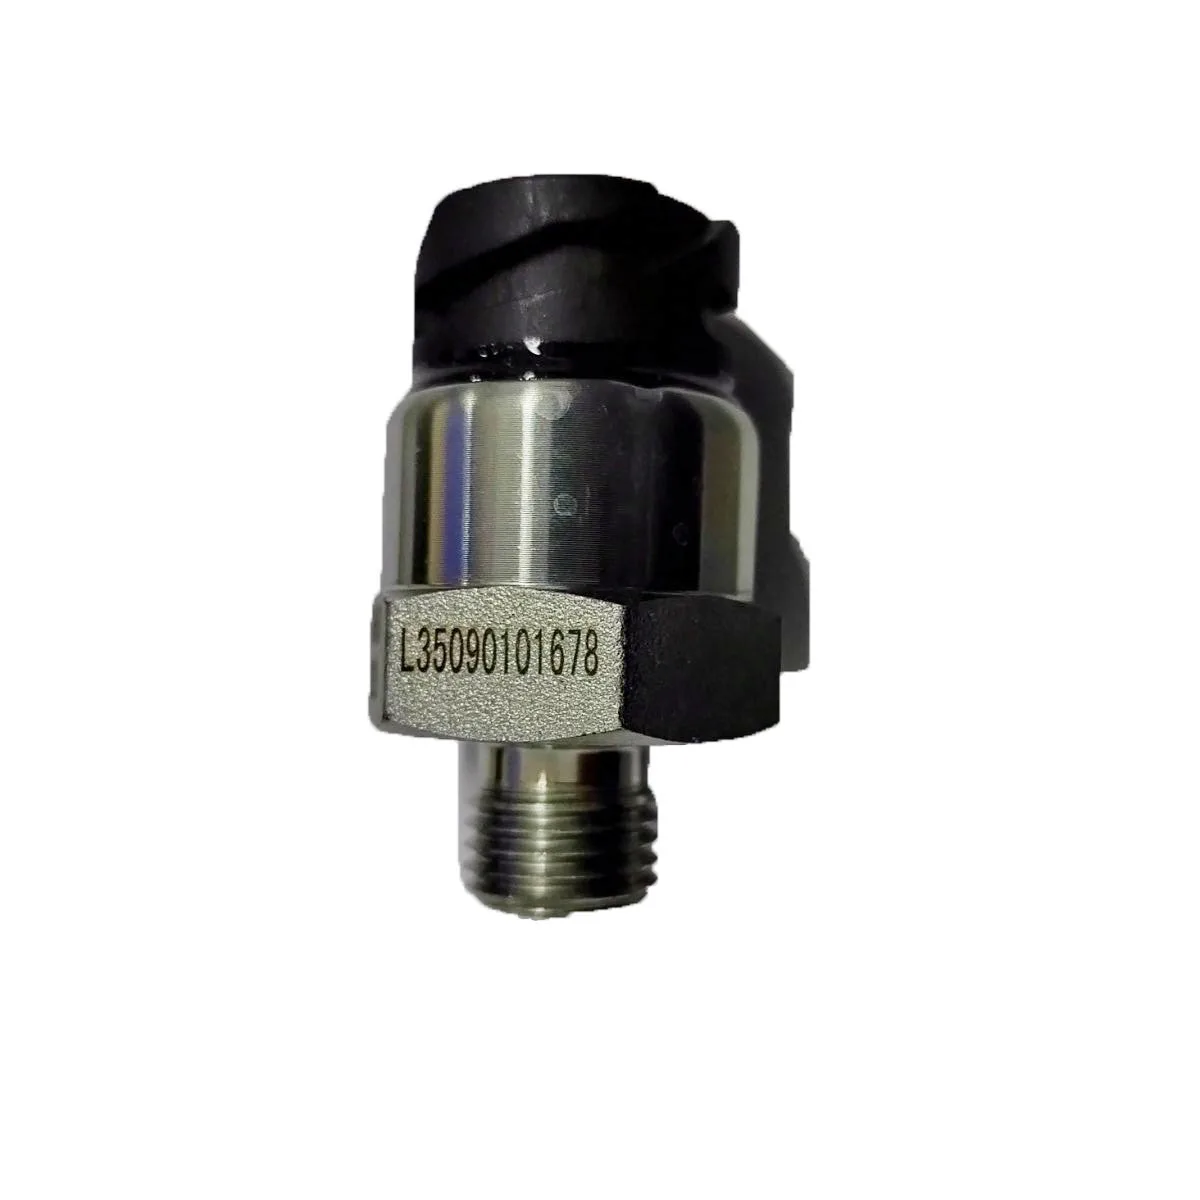 WB210201372 Oil Pressure Sensor